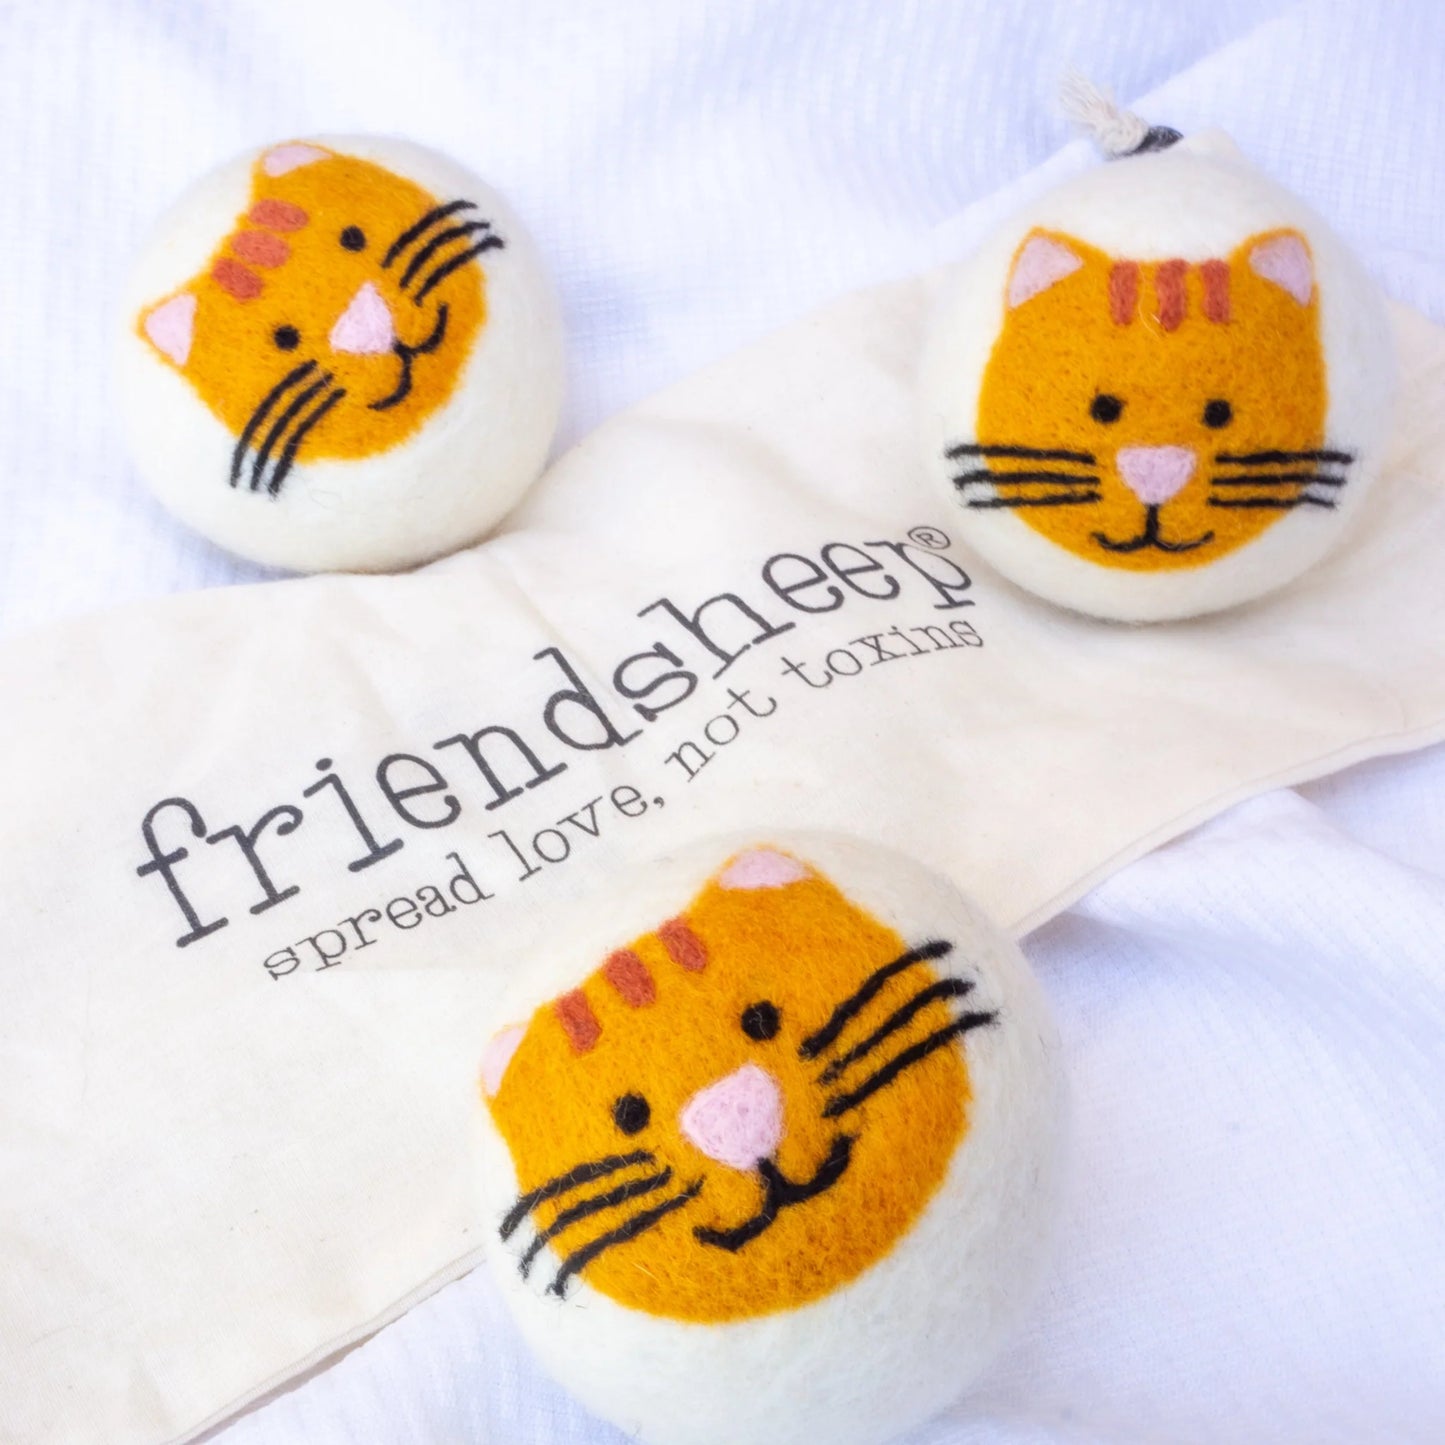 Friendsheep Cool Cats (Orange) Trio